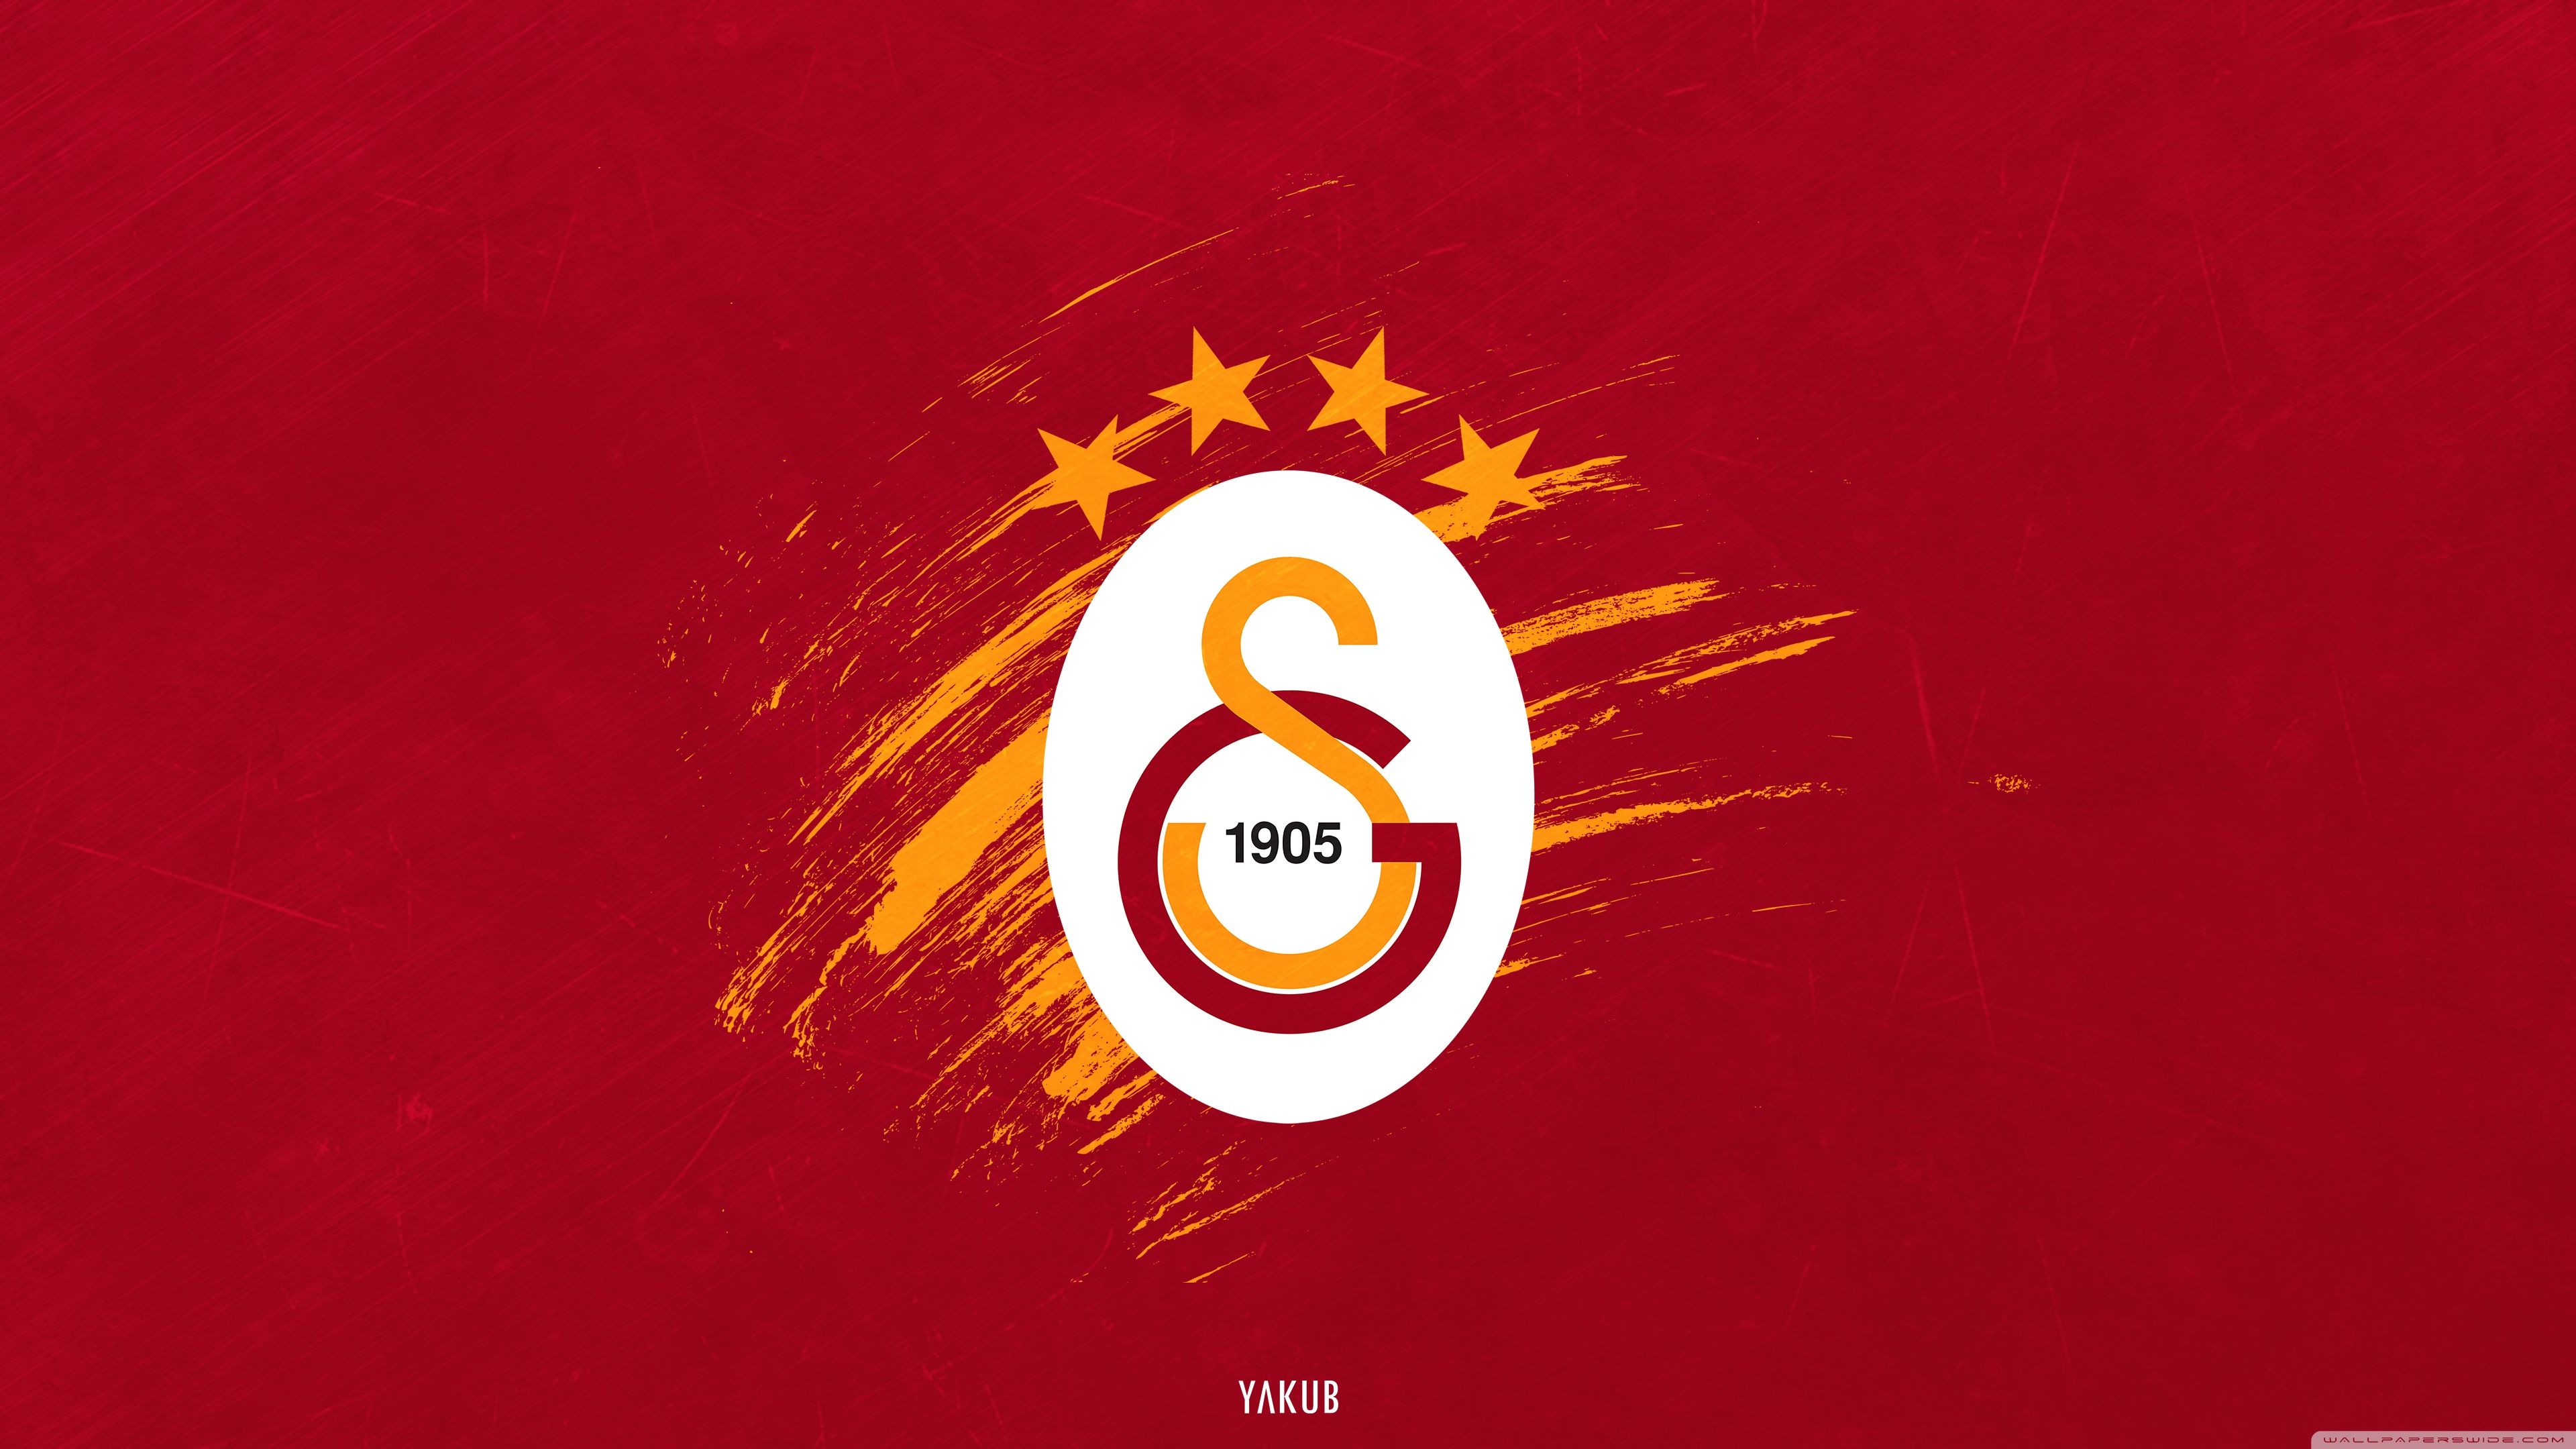 Galatasaray Wallpapers 4k Hd Galatasaray Backgrounds On Wallpaperbat